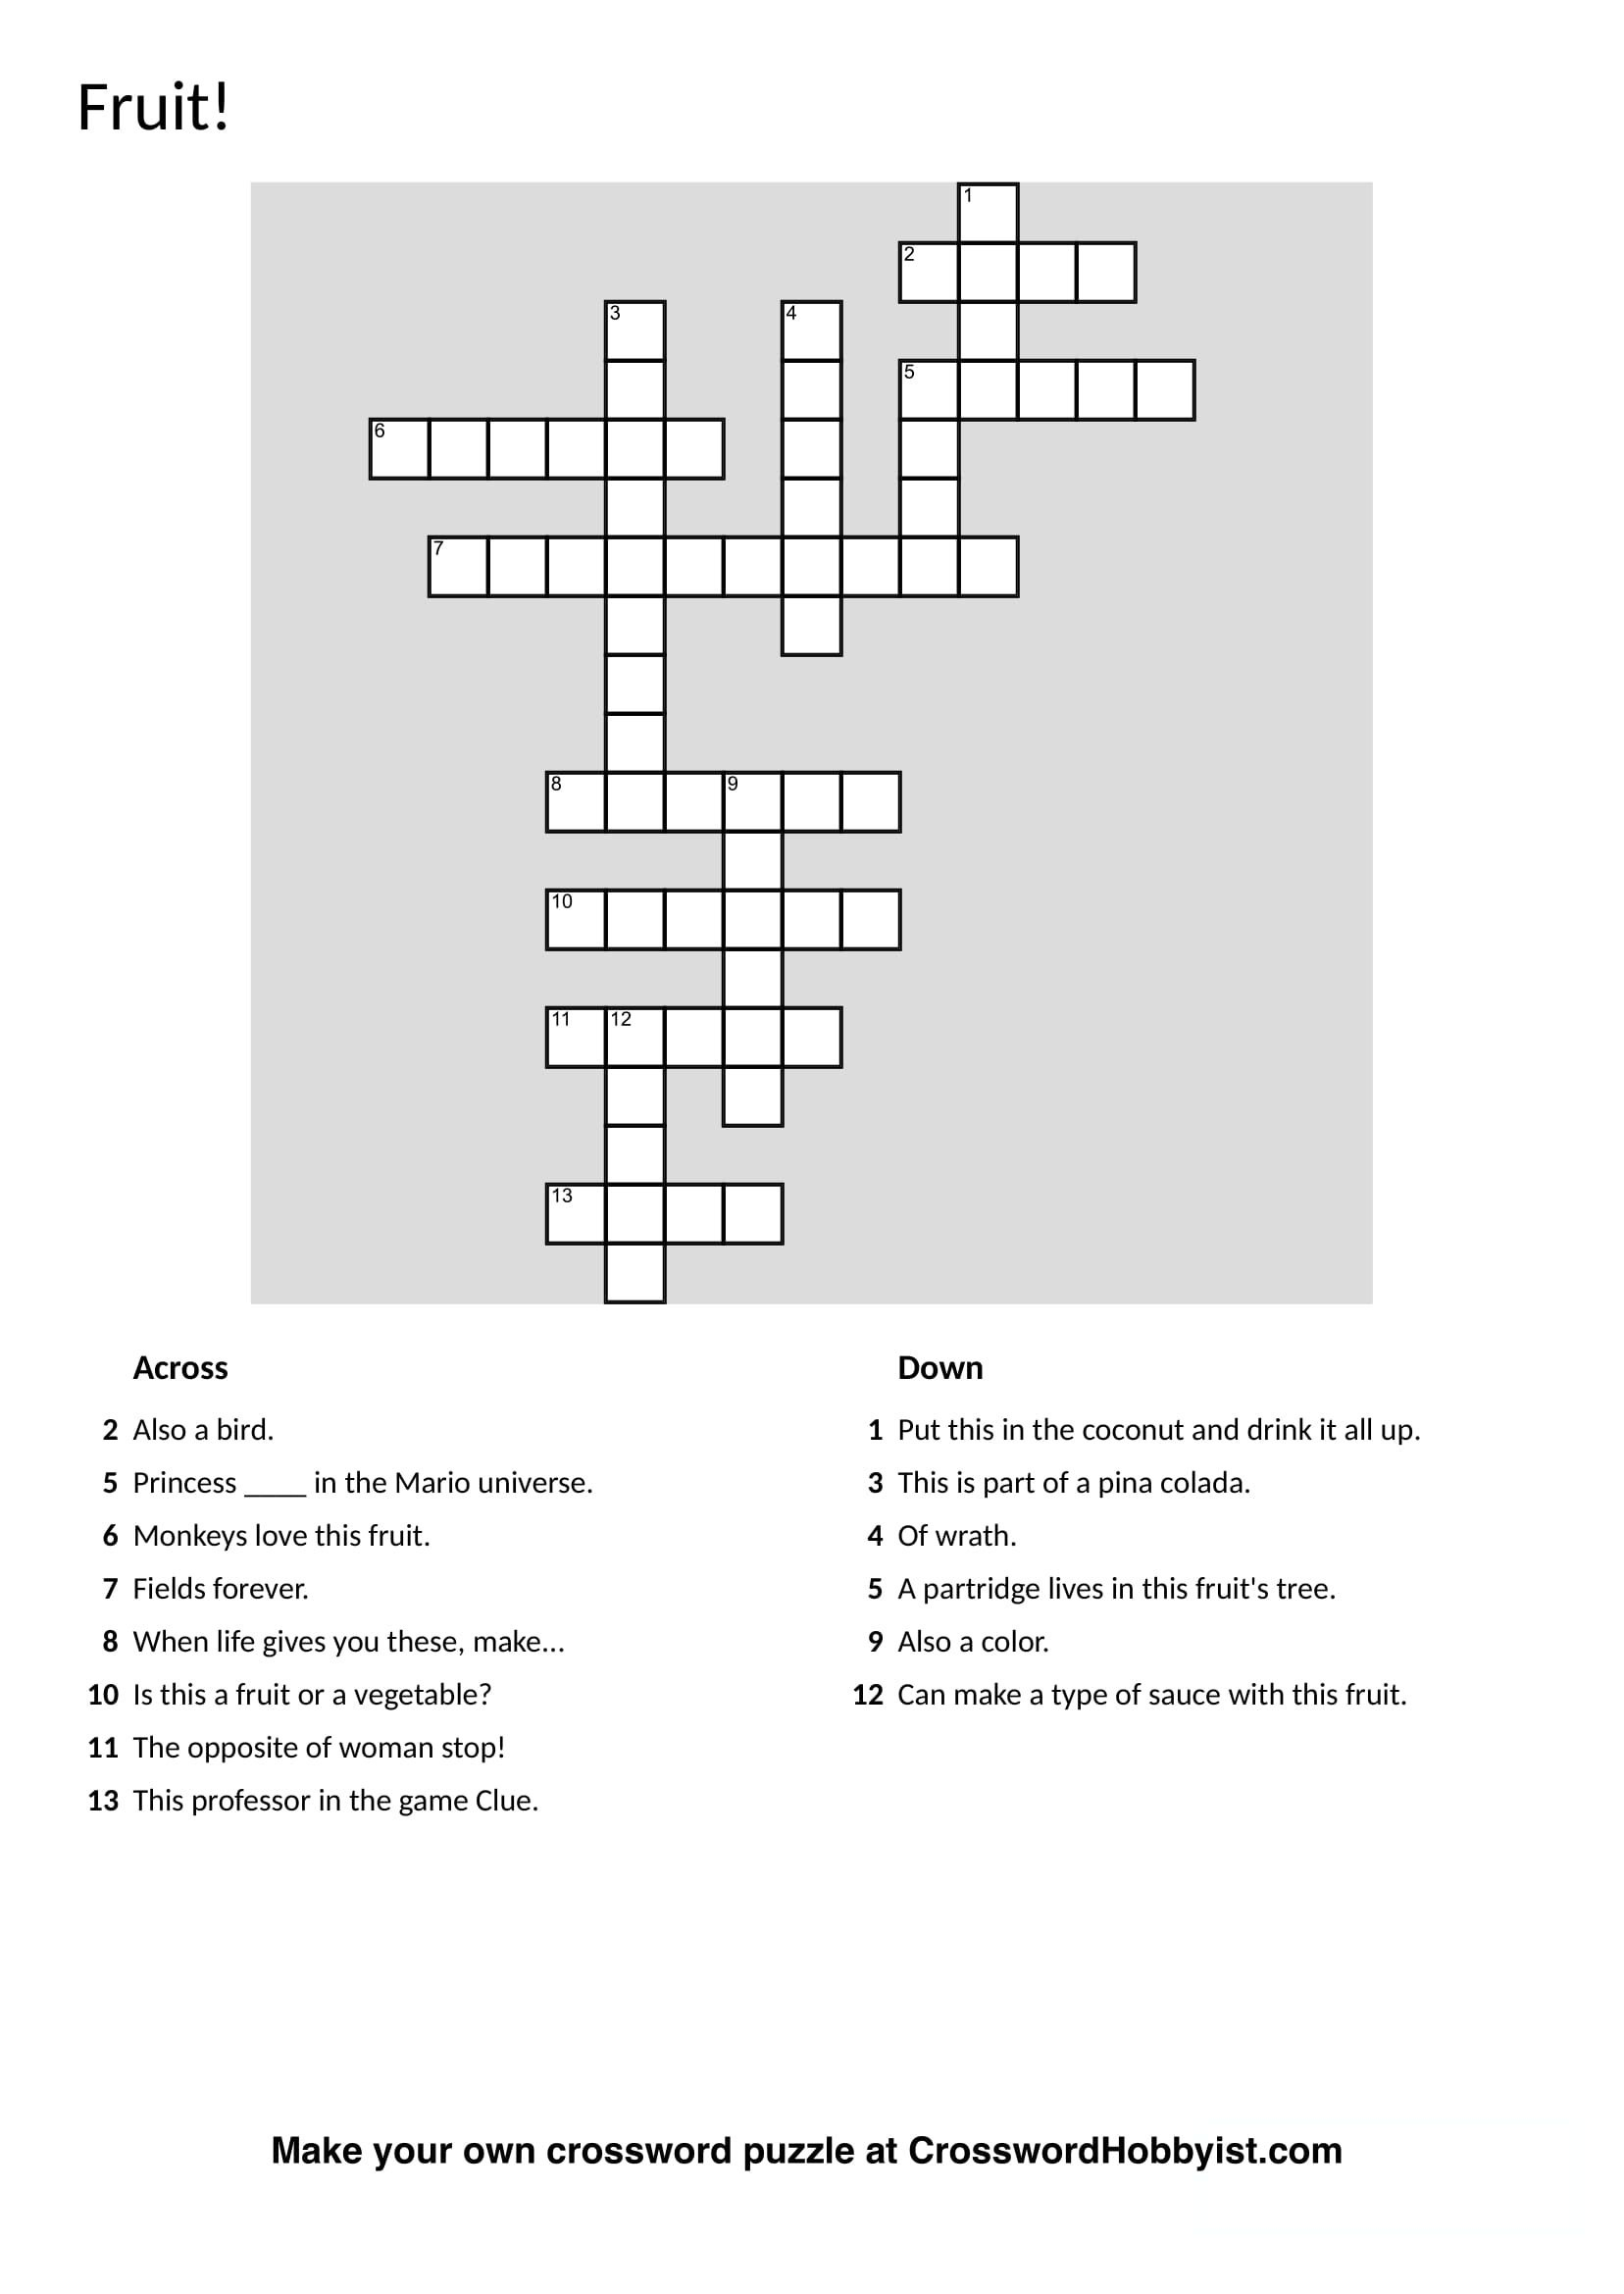 Create My Own Printable Crossword Puzzle